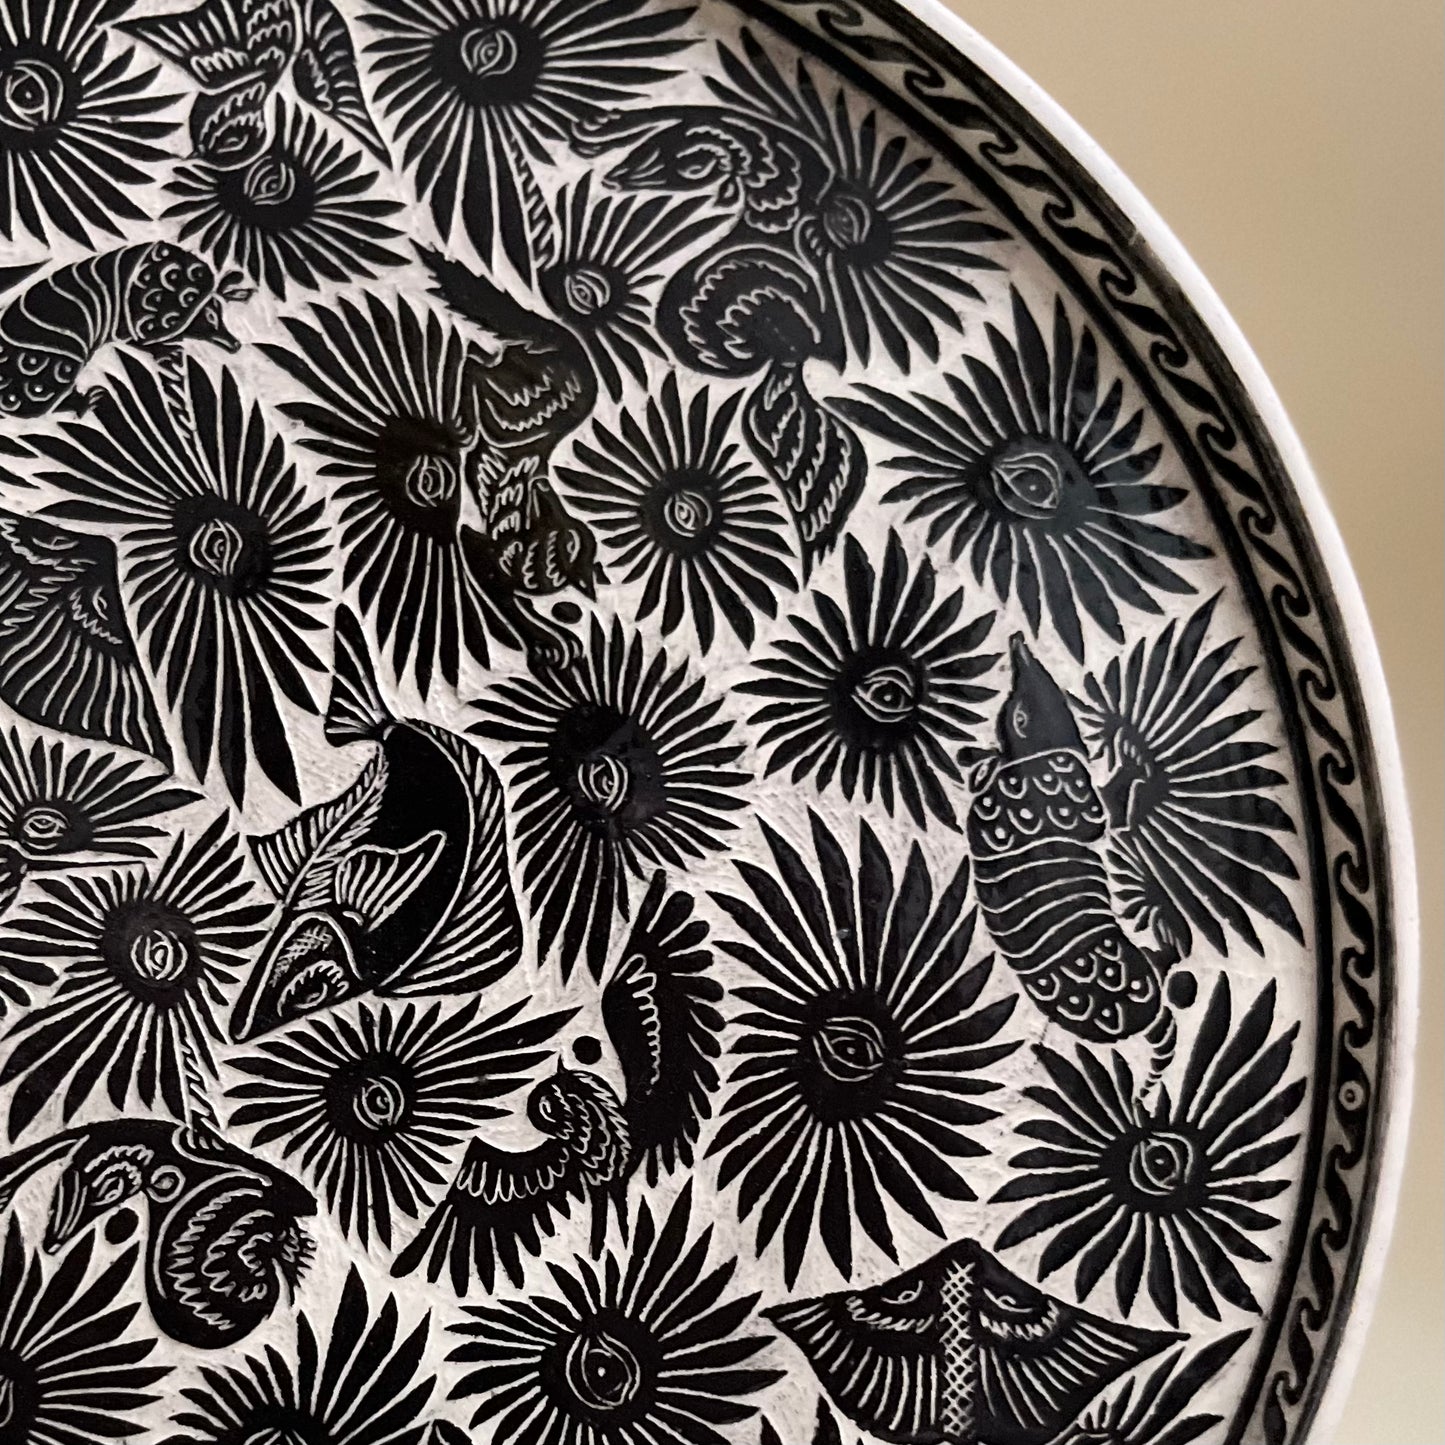 Mixteca Ceramic Plate by Juan Rodriguez